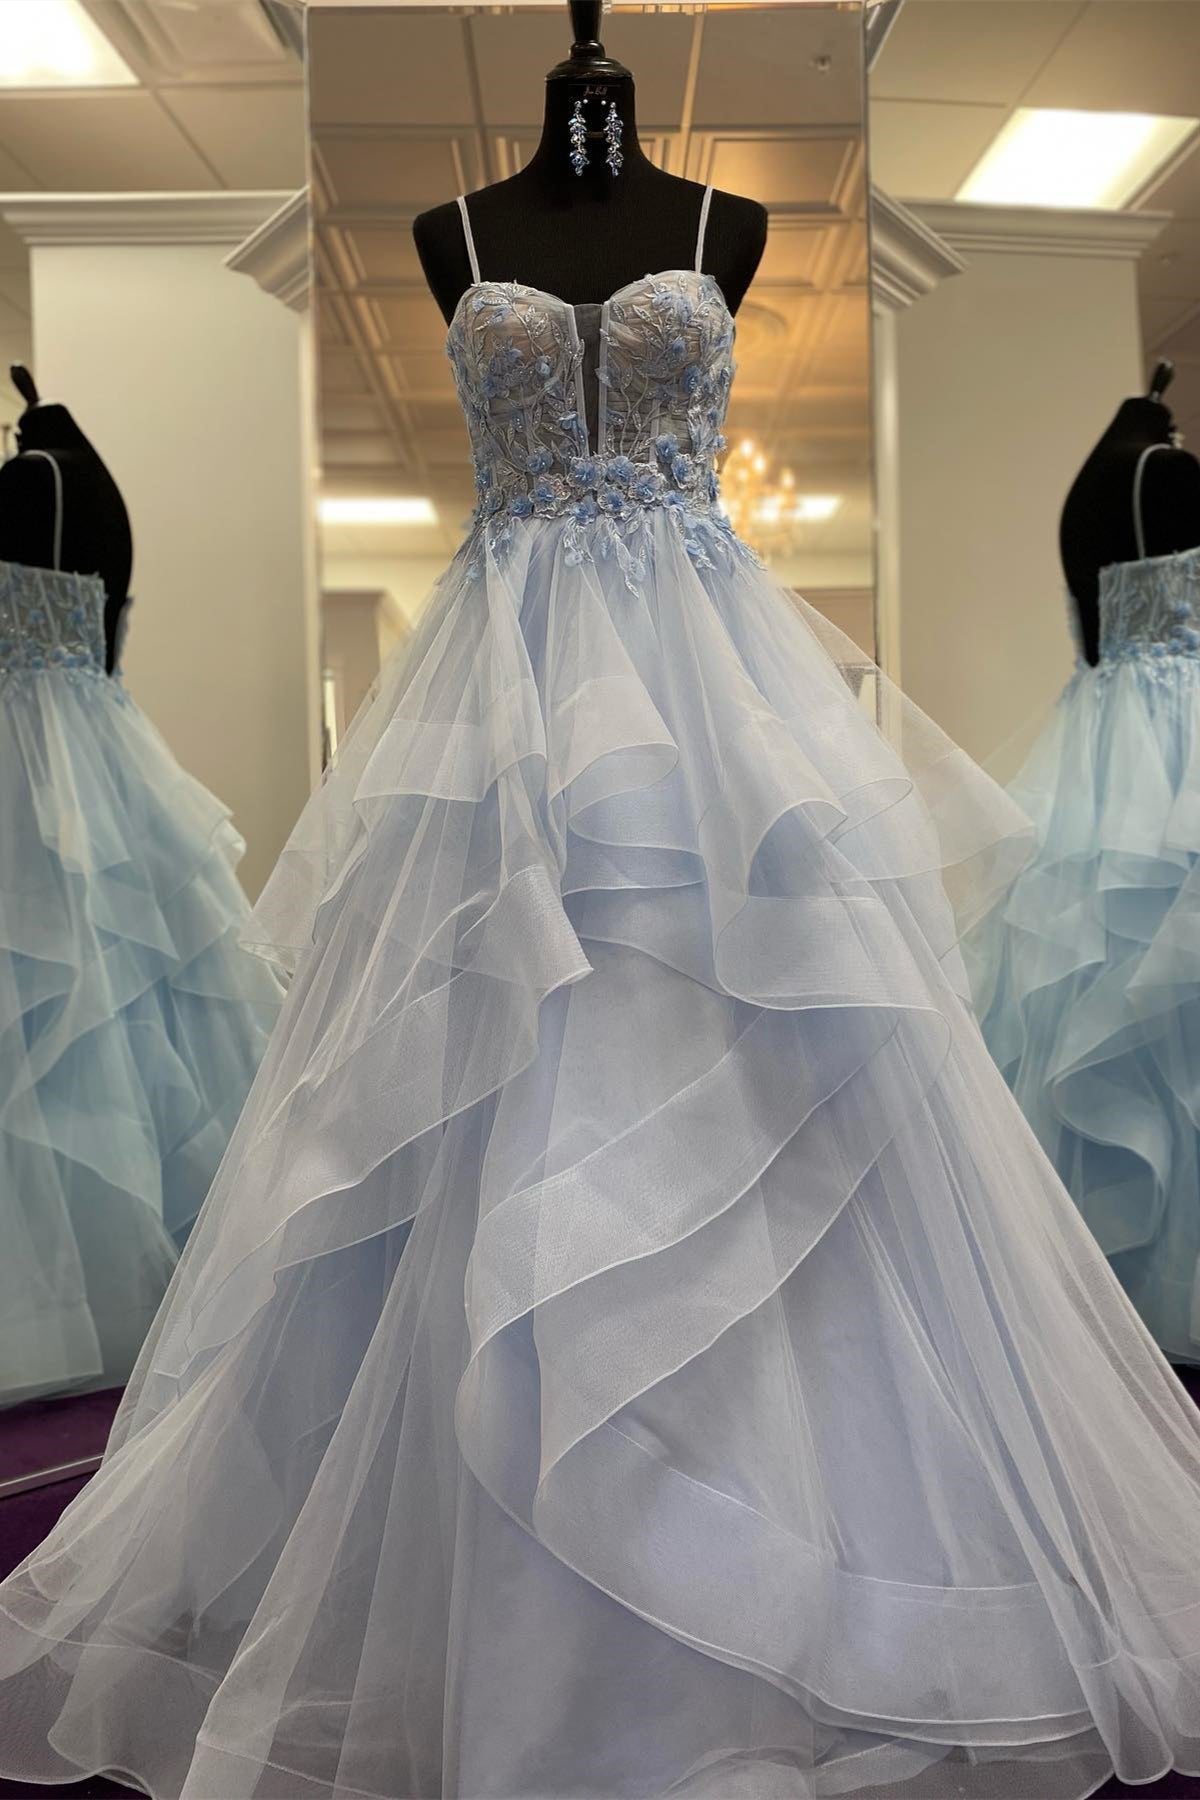 Channel | Light Blue Straps Layers Floral A-line Long Prom Dress